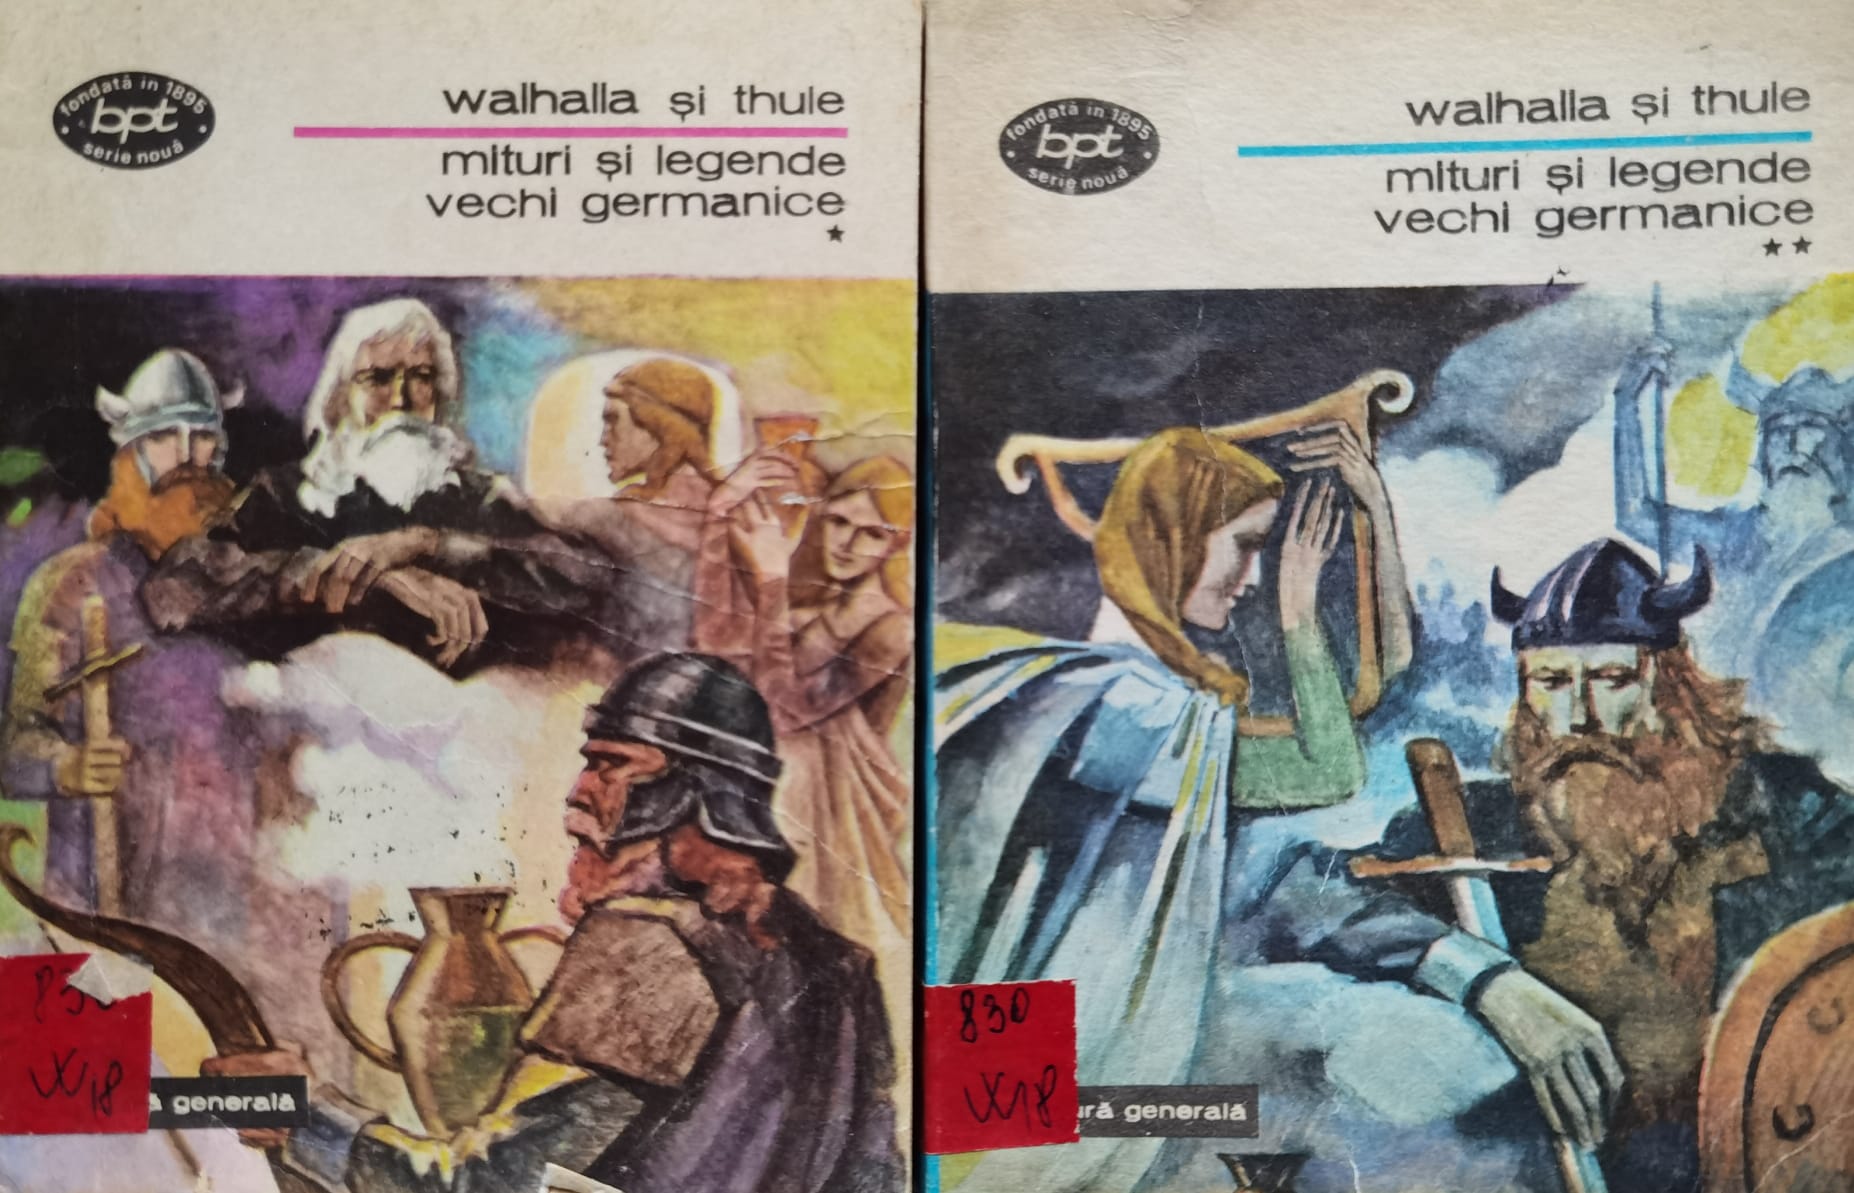 mituri si legende vechi germanice vol. 1-2                                                           walhalla si thule                                                                                   